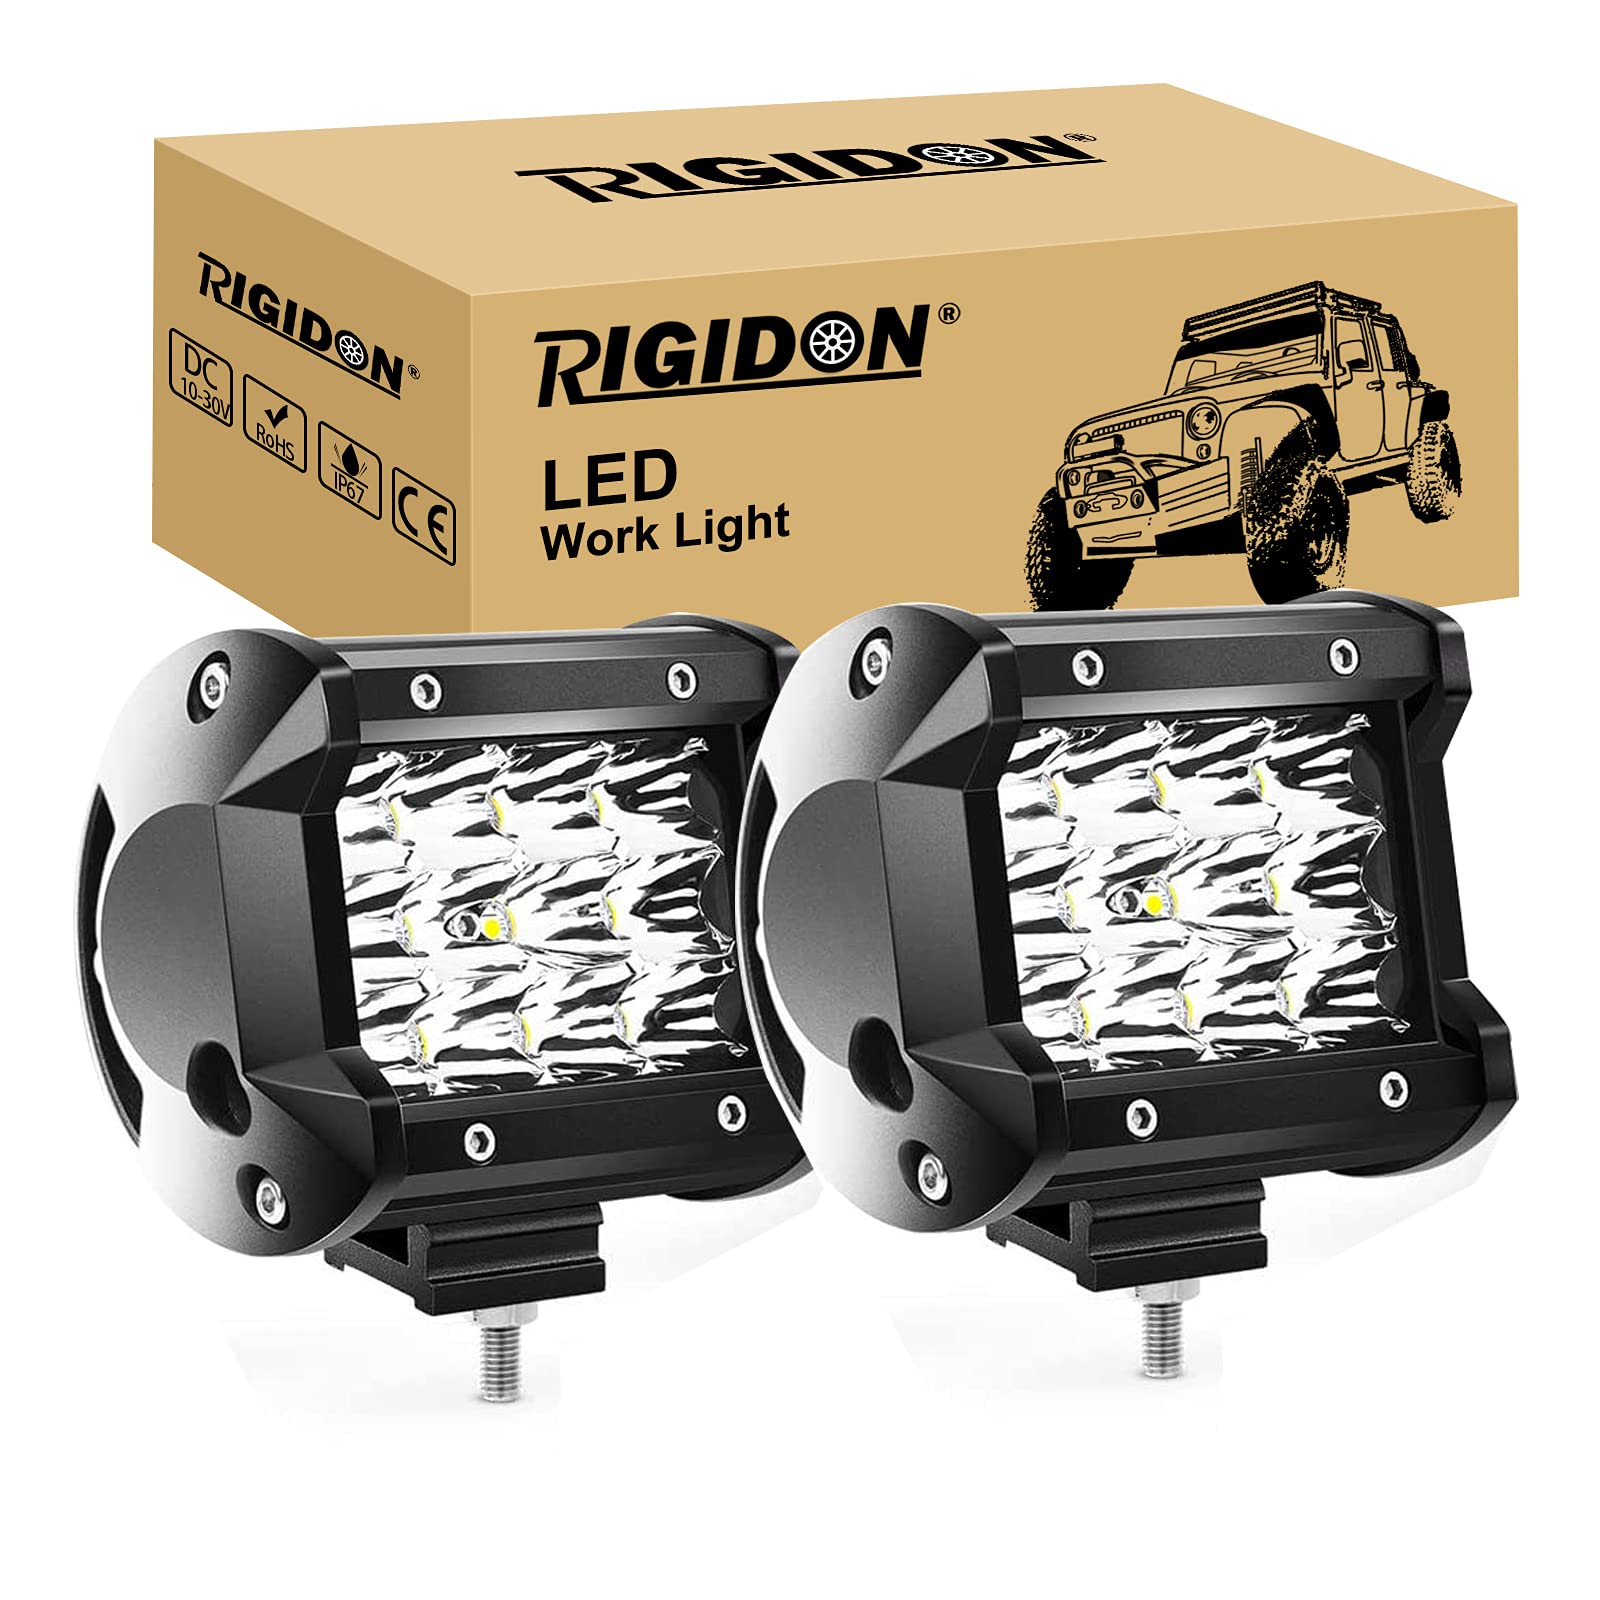 RIGIDON 2 Pcs Led arbeitslicht, 4 Zoll 10cm 36W Spot Strahler offroad beleuchtung für Auto SUV ATV, Traktor, LKW, 4x4, 6000K Weiß led nebelscheinwerfer, led arbeitsscheinwerfer, led scheinwerfer von RIGIDON